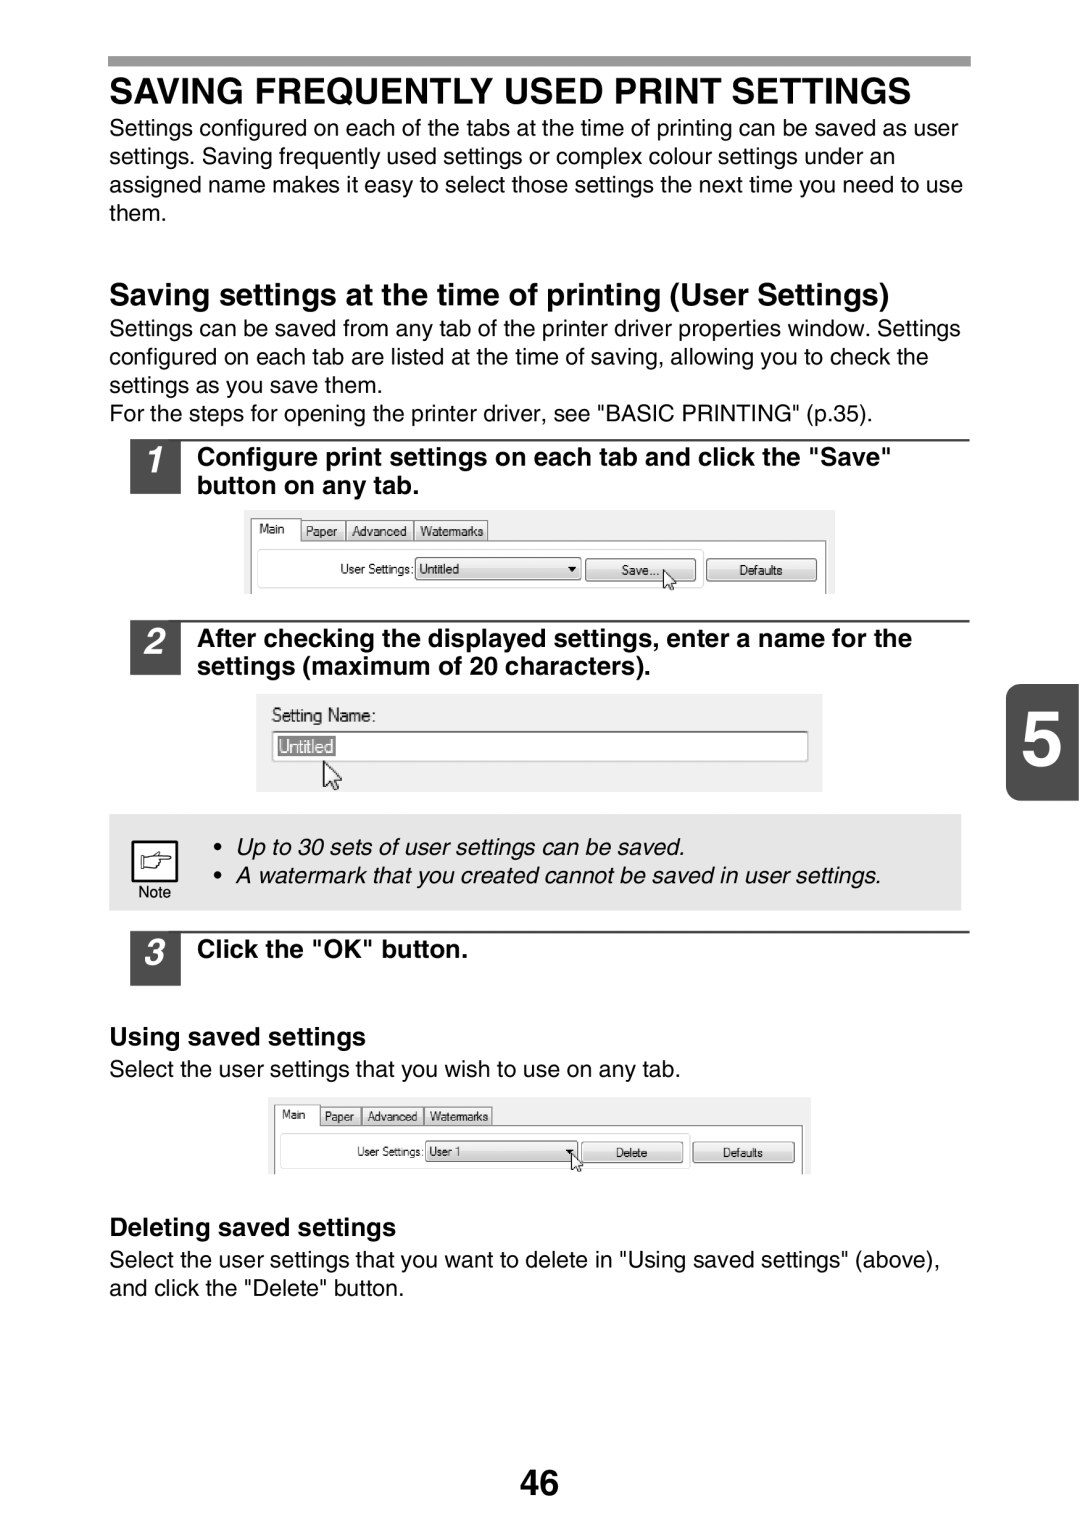 Sharp MX-B200 manual Saving Frequently Used Print Settings, Saving settings at the time of printing User Settings 